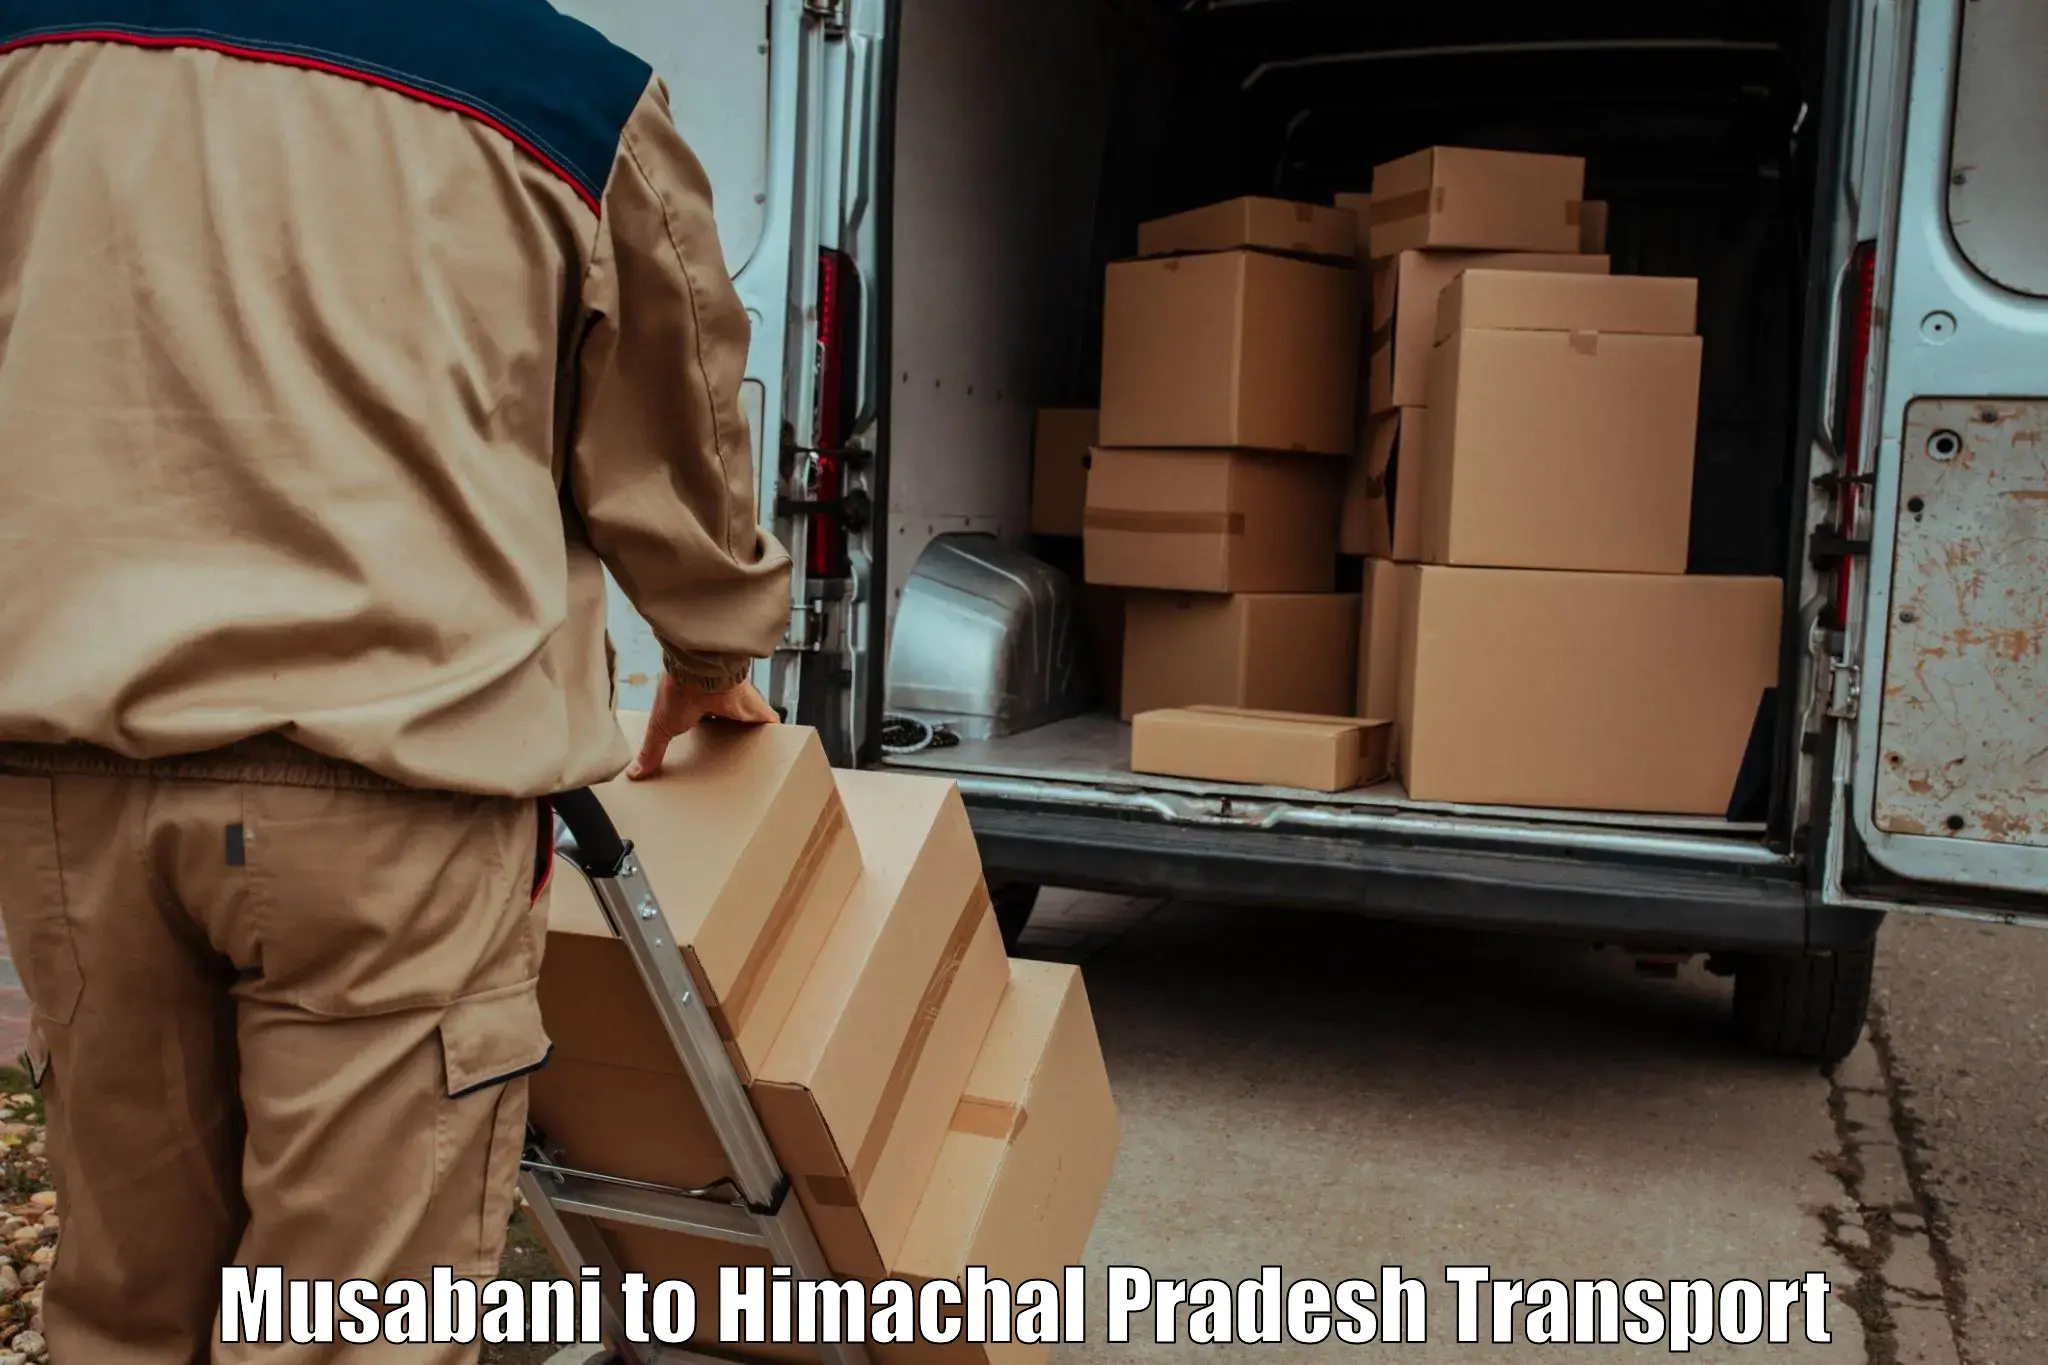 Shipping partner Musabani to Chachyot